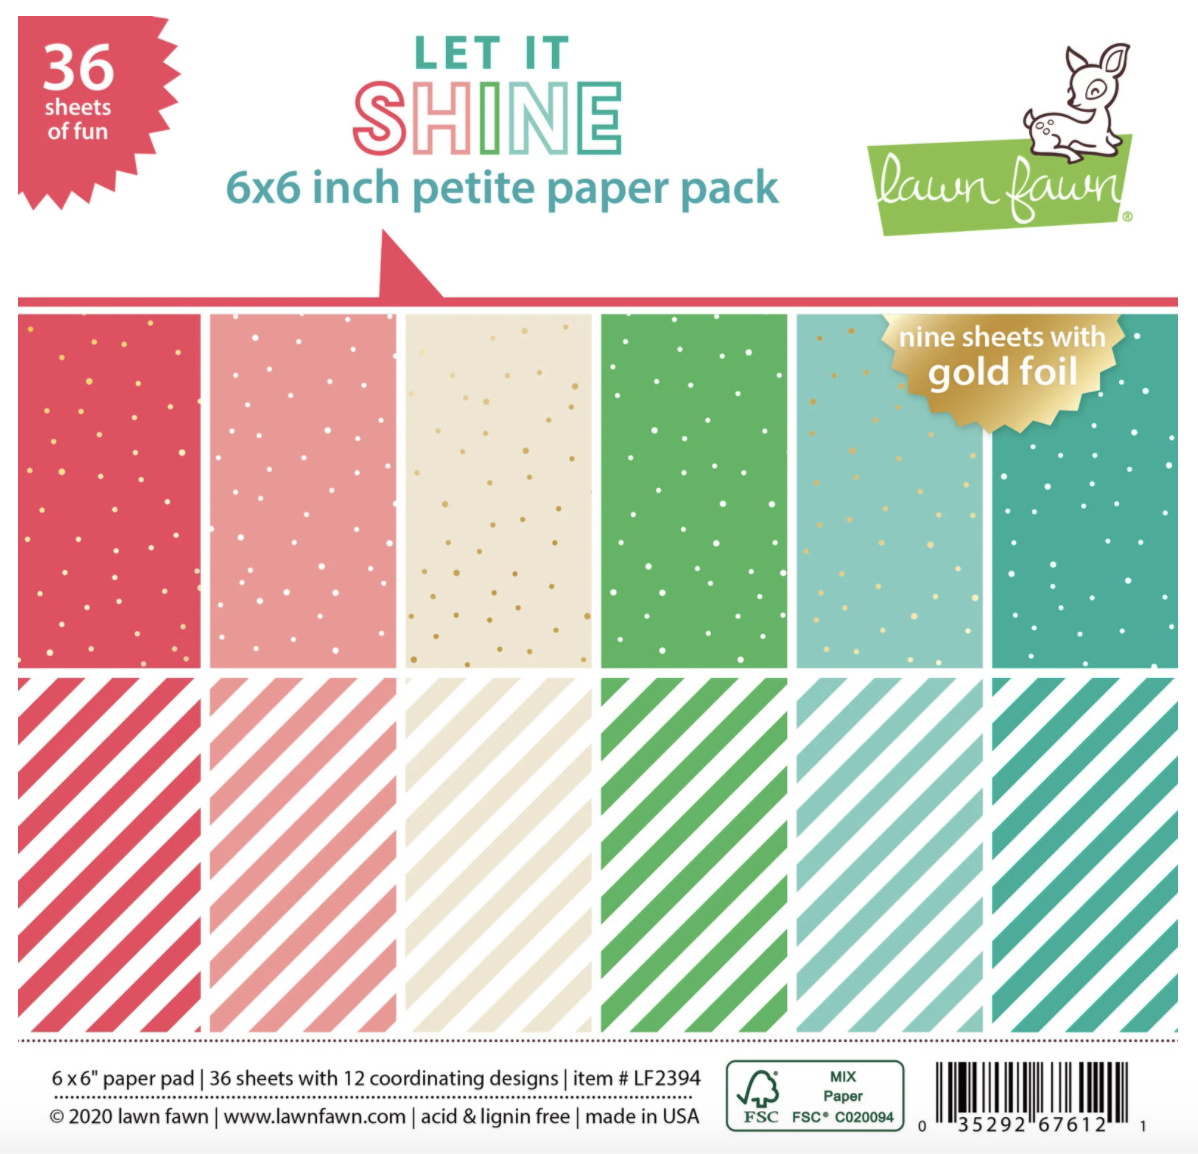 Lawn Fawn, Let It Shine Petite Paper Pack